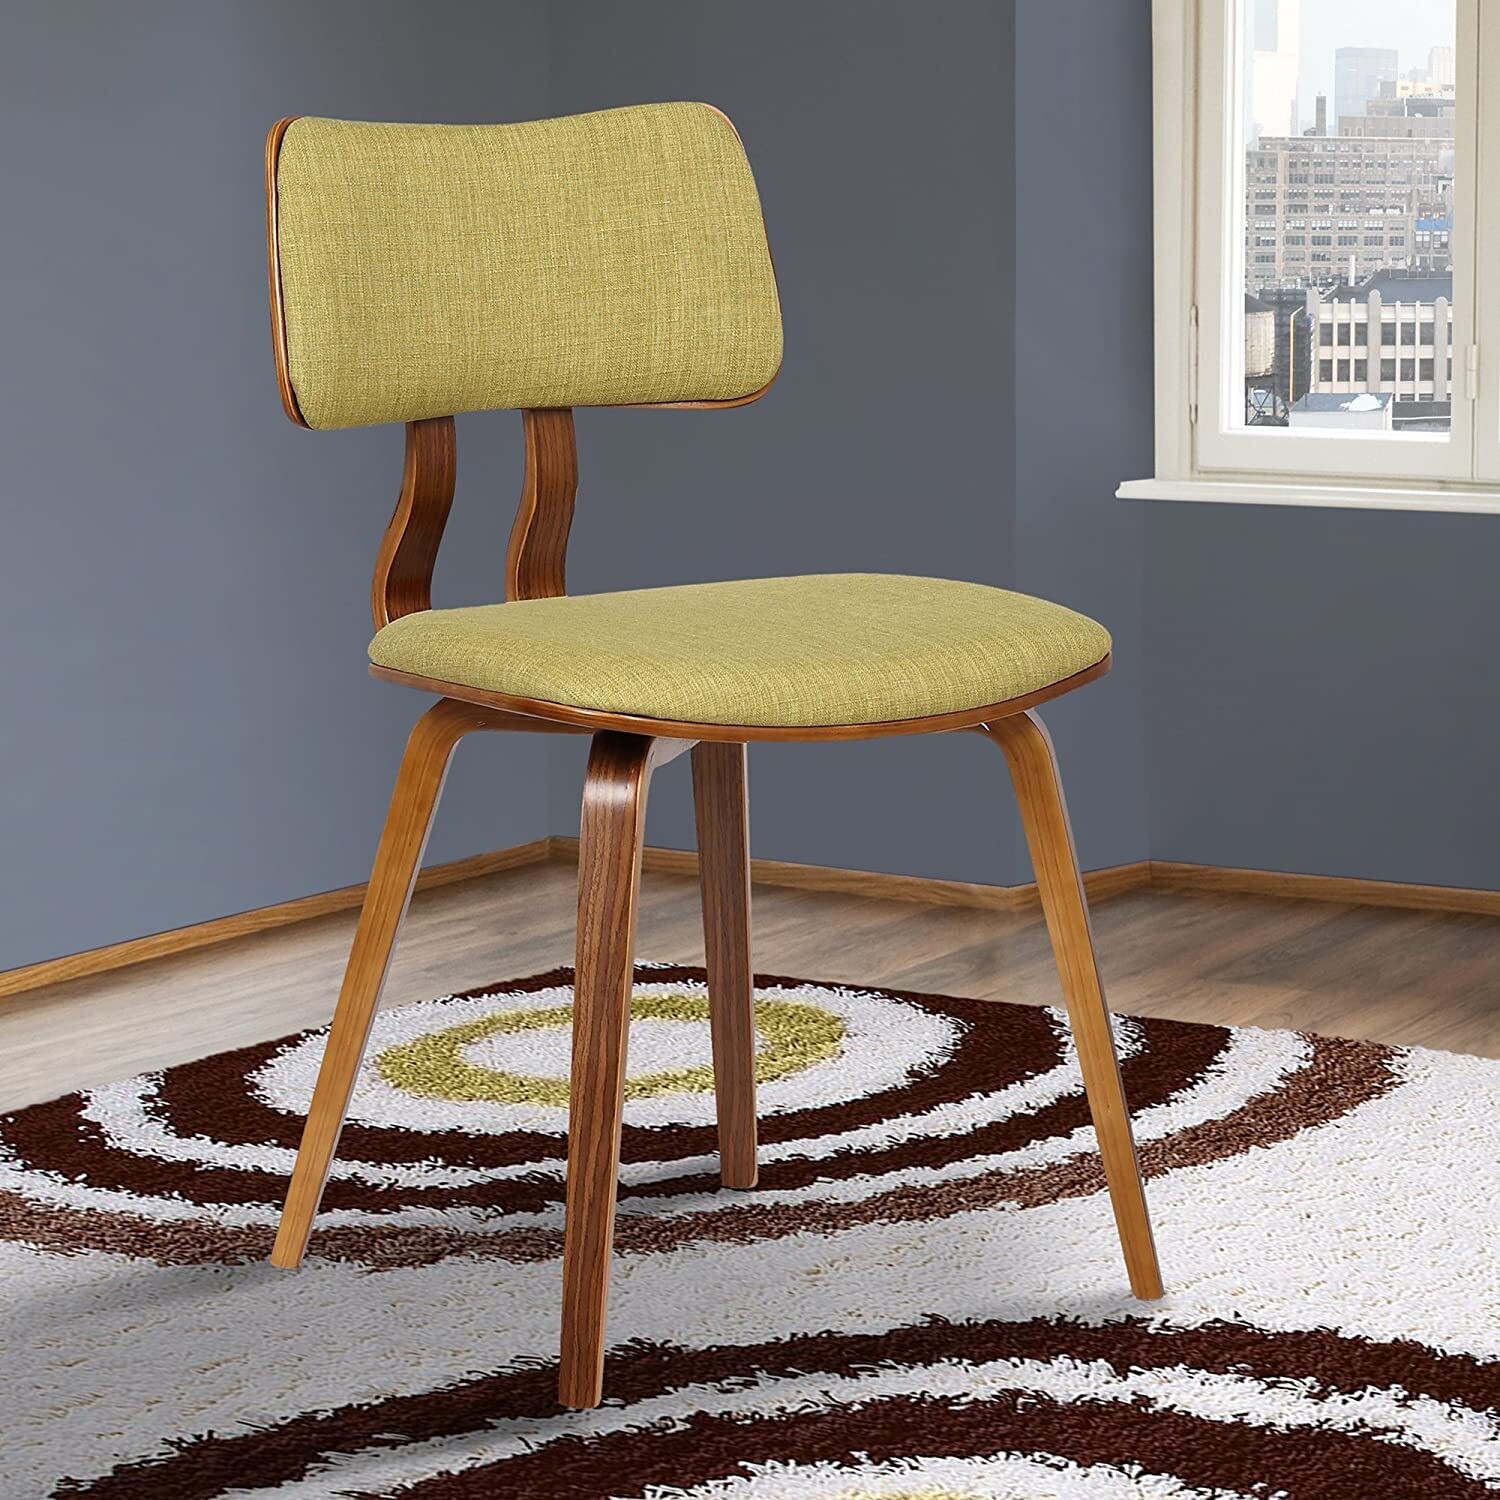 Armen Living Jaguar Dining Chair in Charcoal Fabric and Walnut Wood Finish,Charcoal/Walnut Finish. Доставка на заказ.